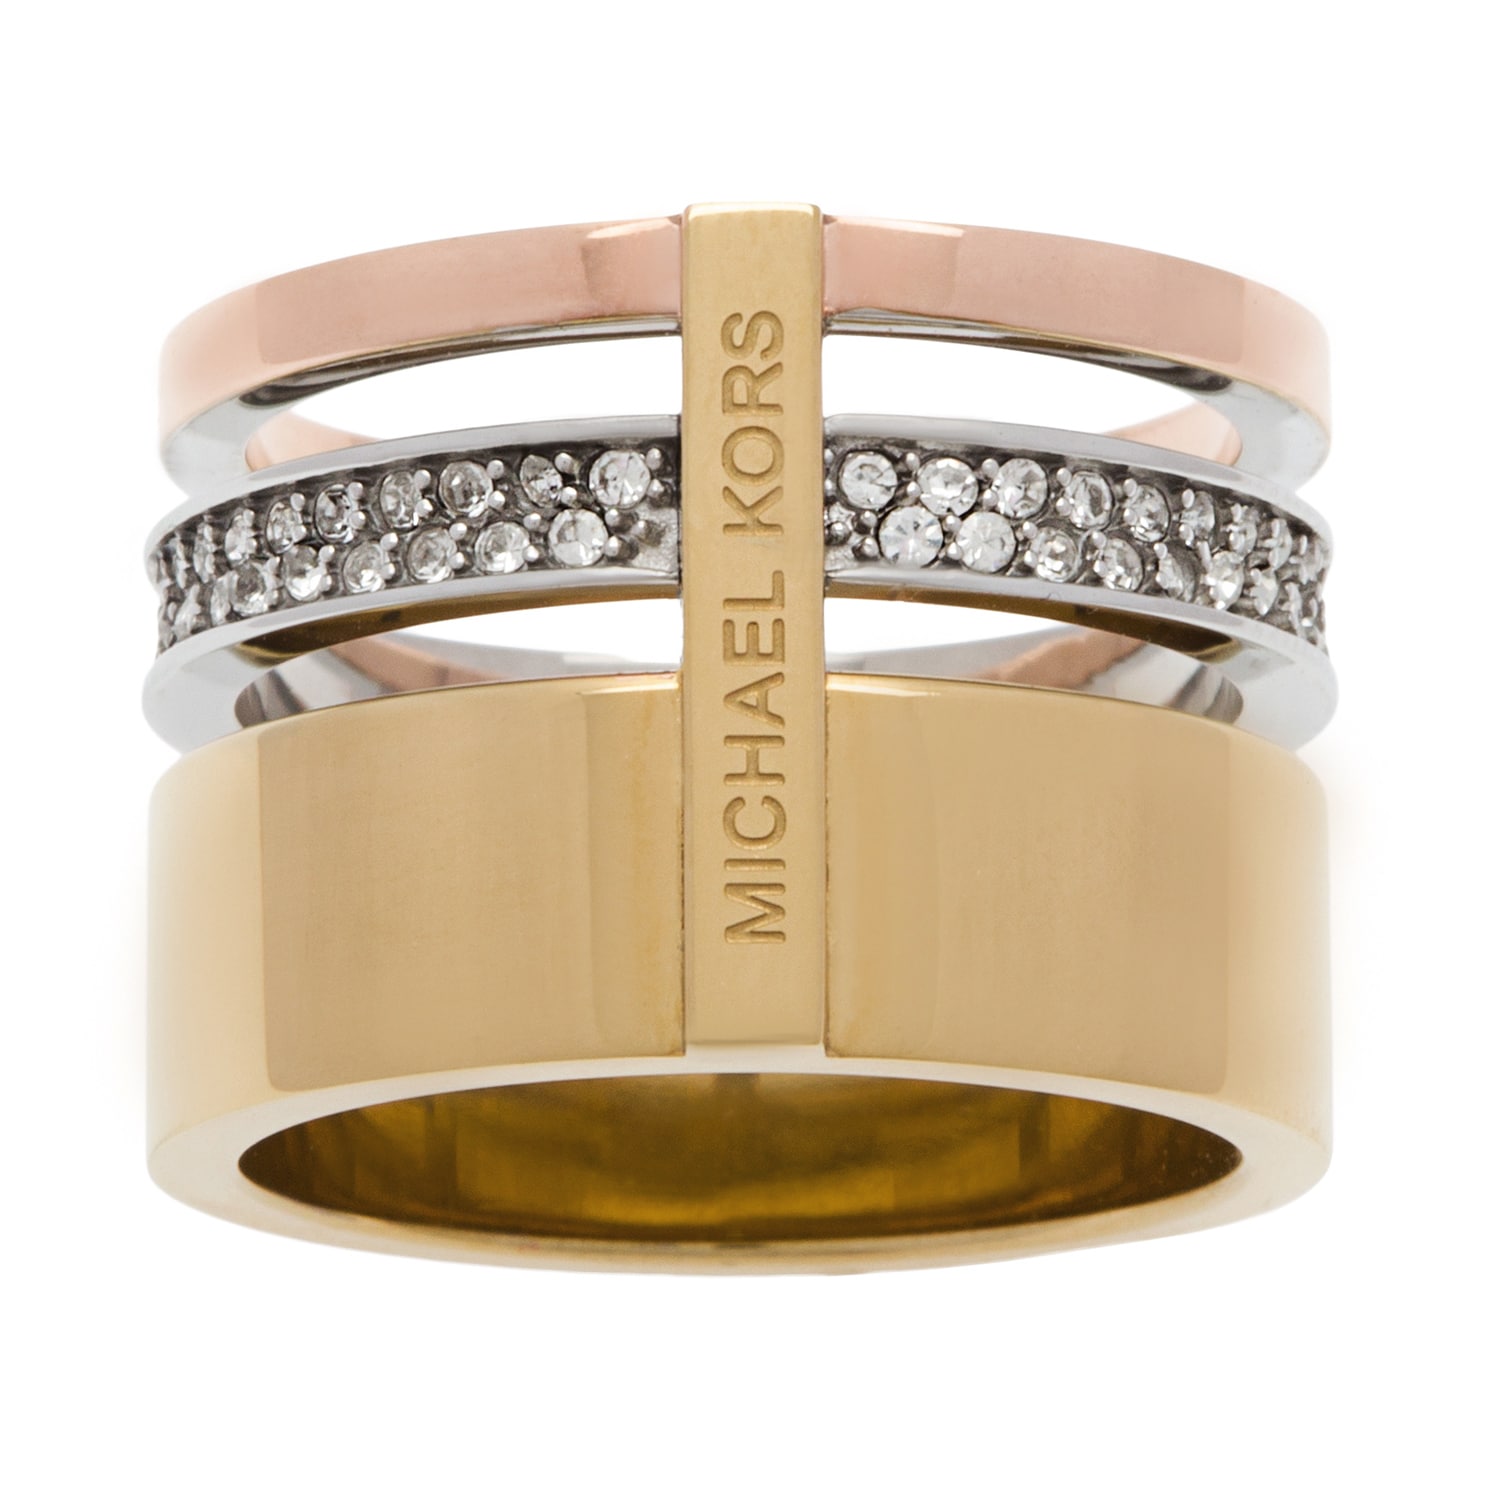 Michael Kors Tricolor Pave Barrel Ring  Barrel rings Michael kors  jewelry Michael kors ring